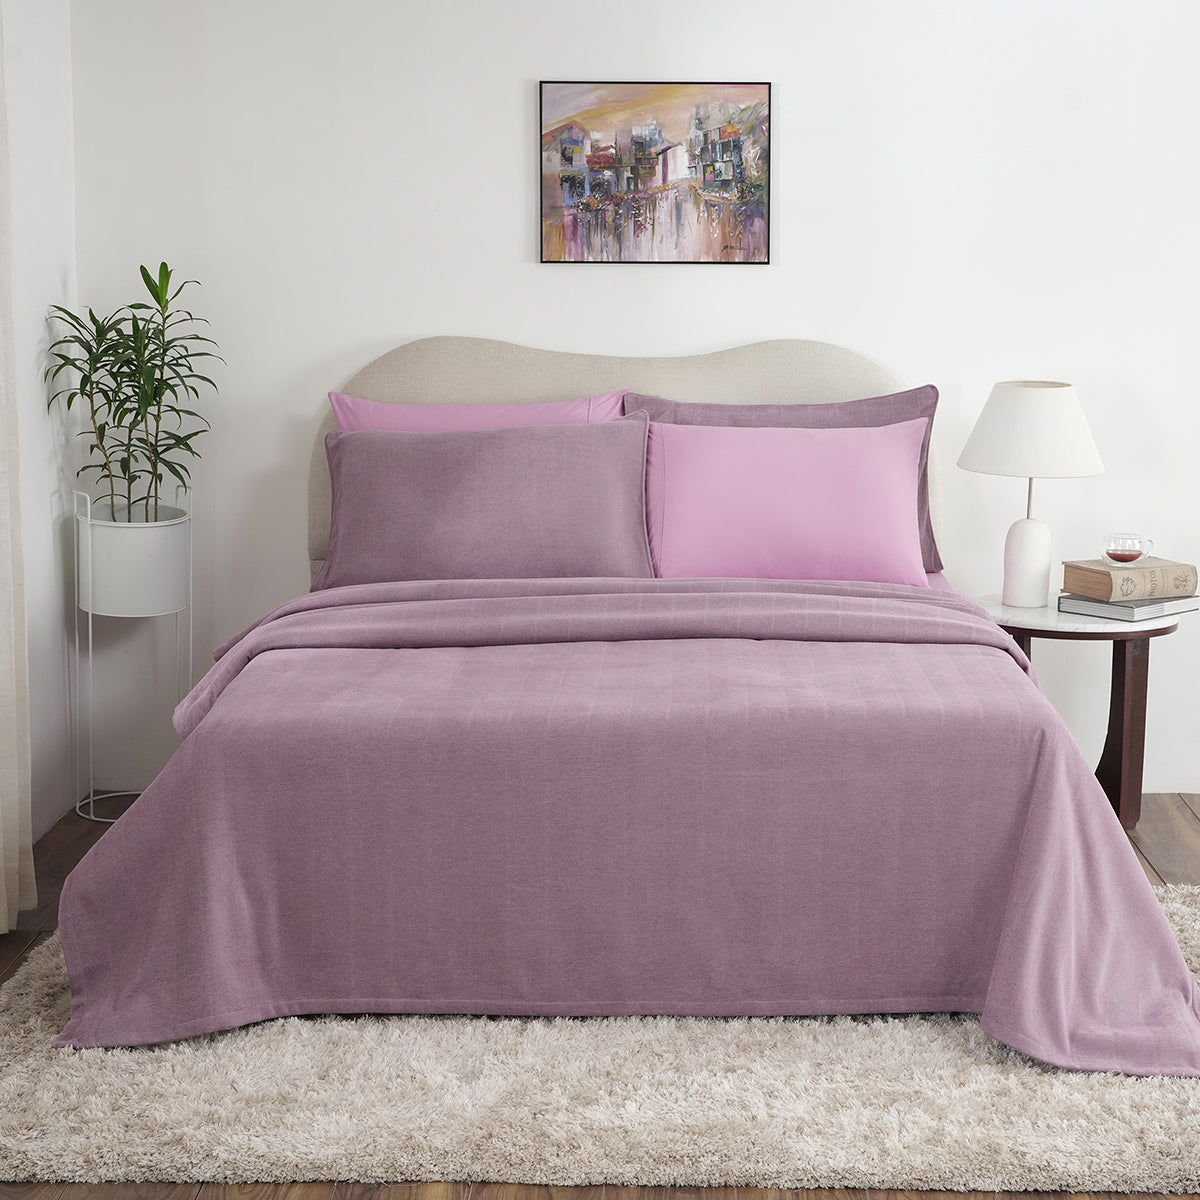 Caroline Woven Herringbone Pattern with Soft Drape Style Purple Bed Cover/Blanket